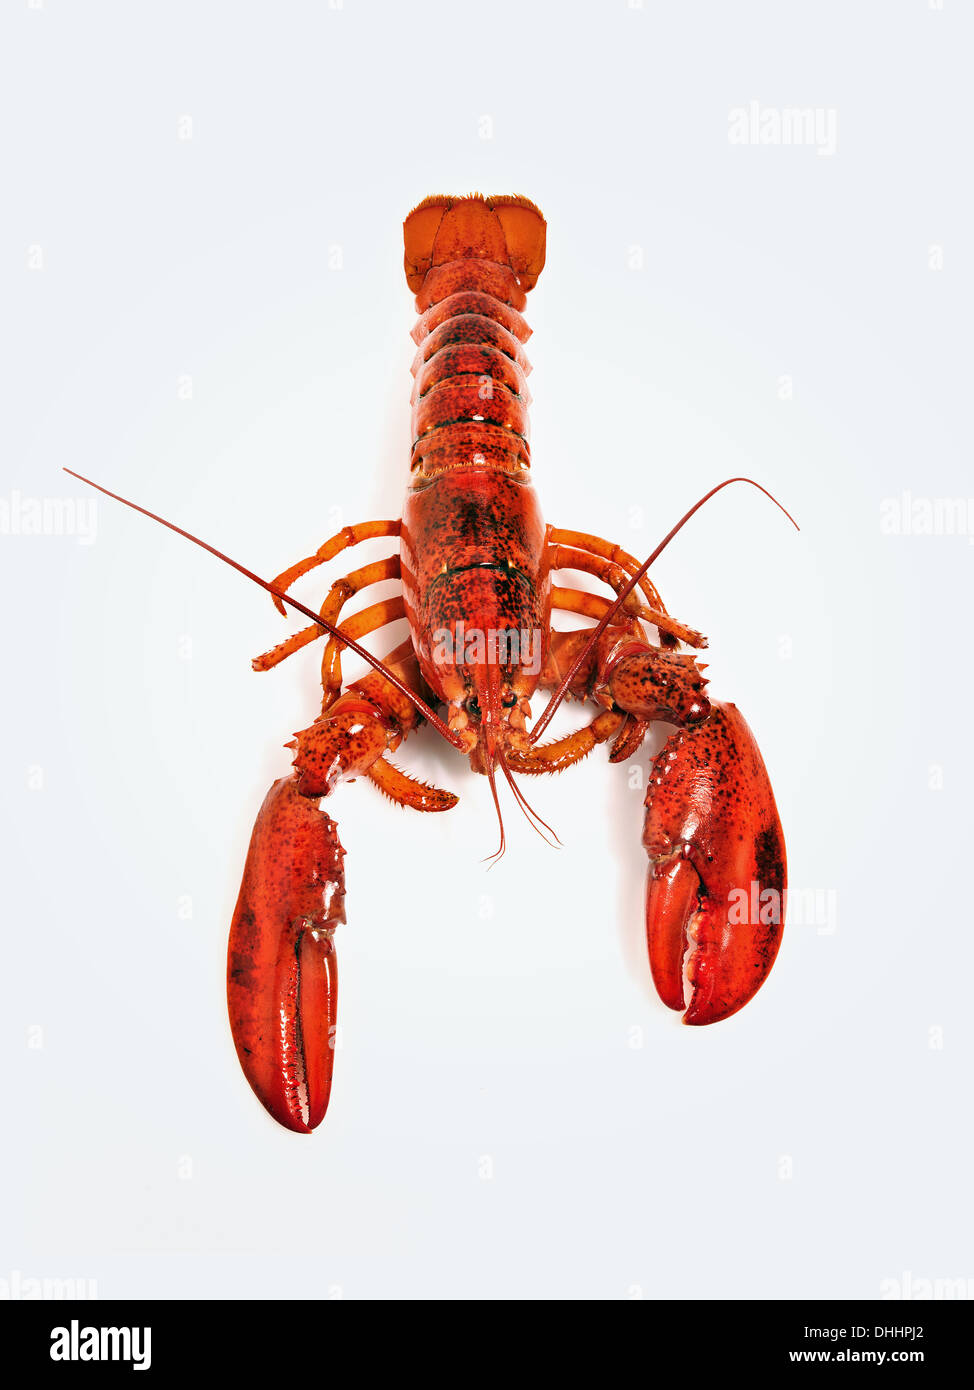 Lobster against white background Banque D'Images